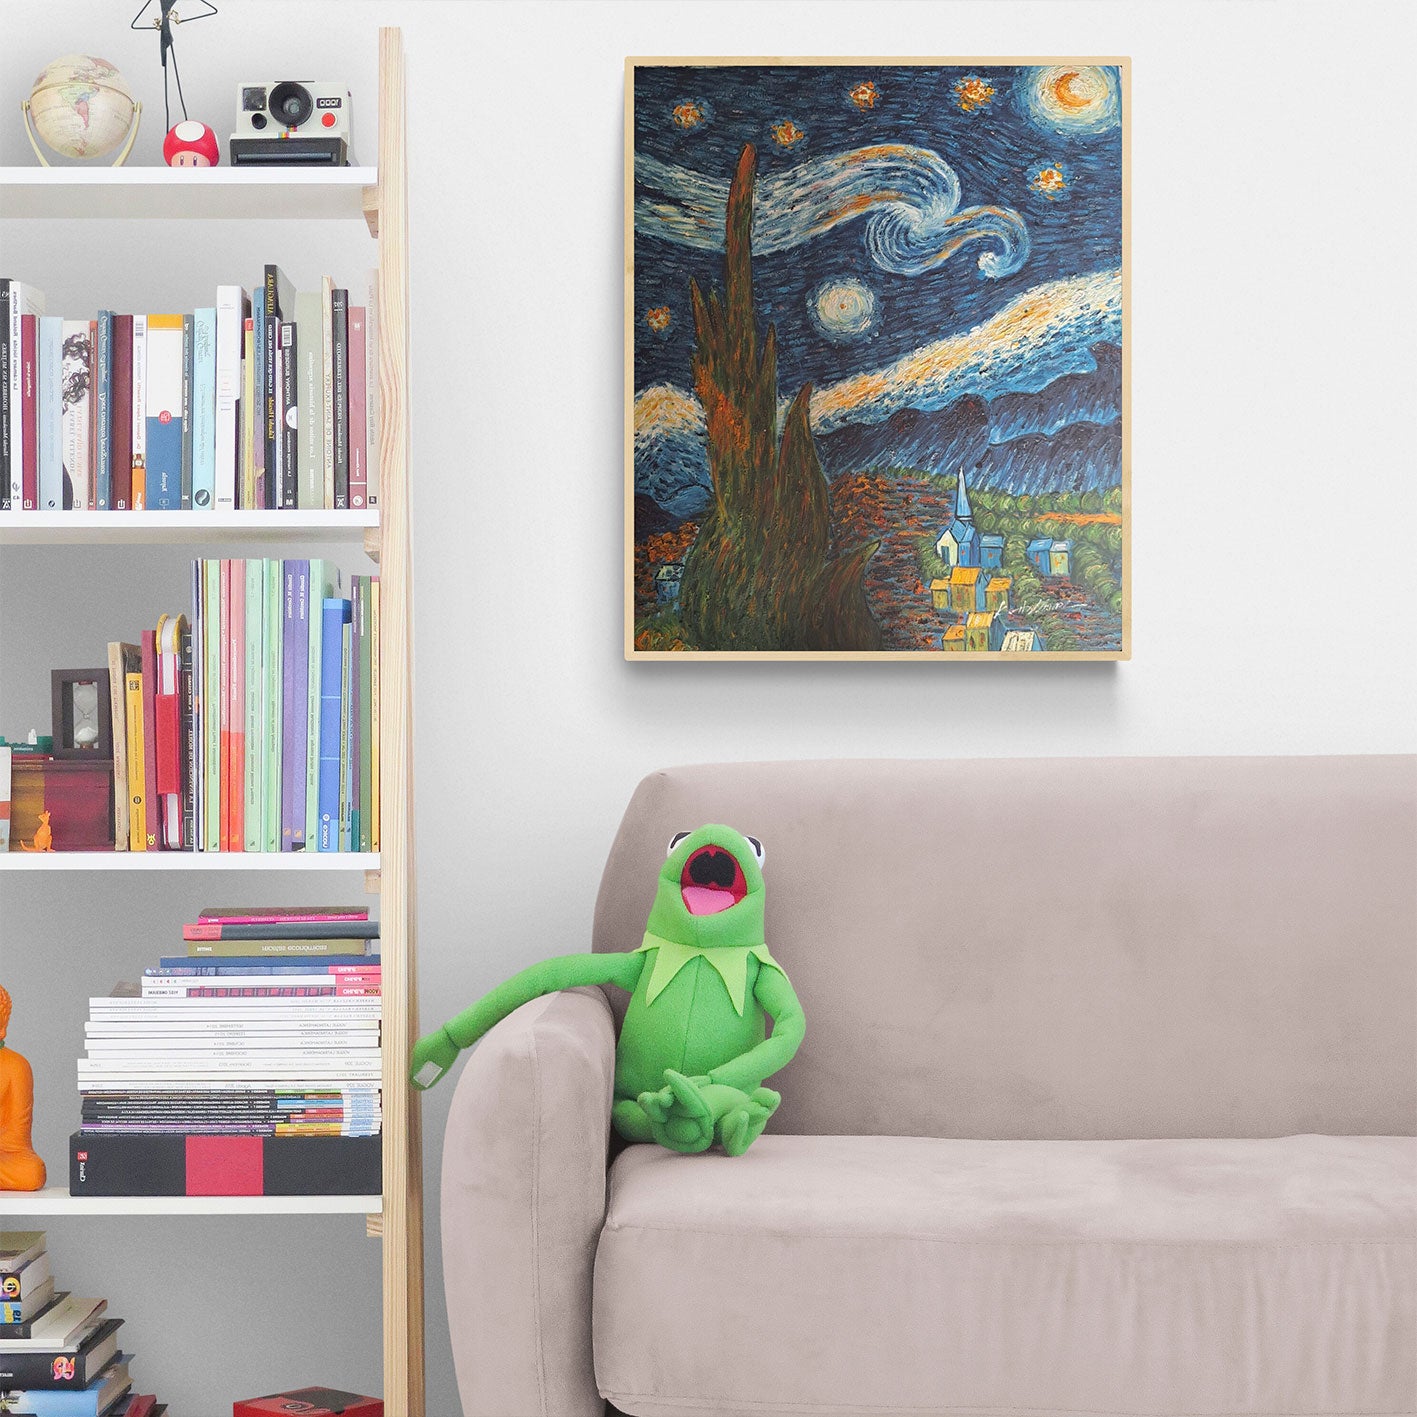 Starry Night painting 50x60 cm